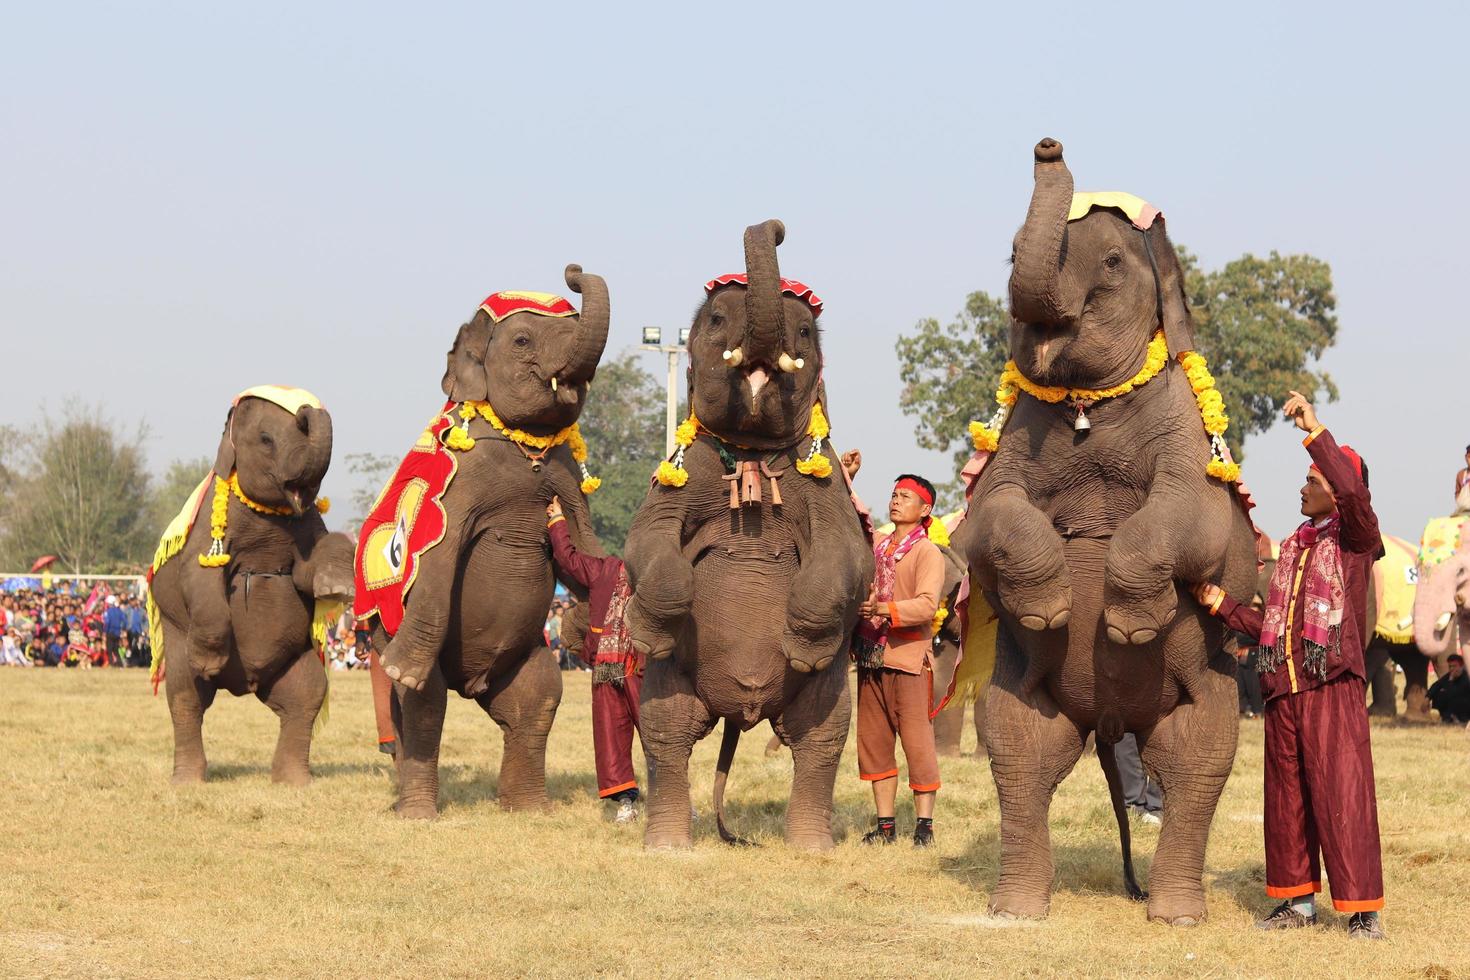 Sayaboury Province, Laos, 2018-Elephant Festival photo